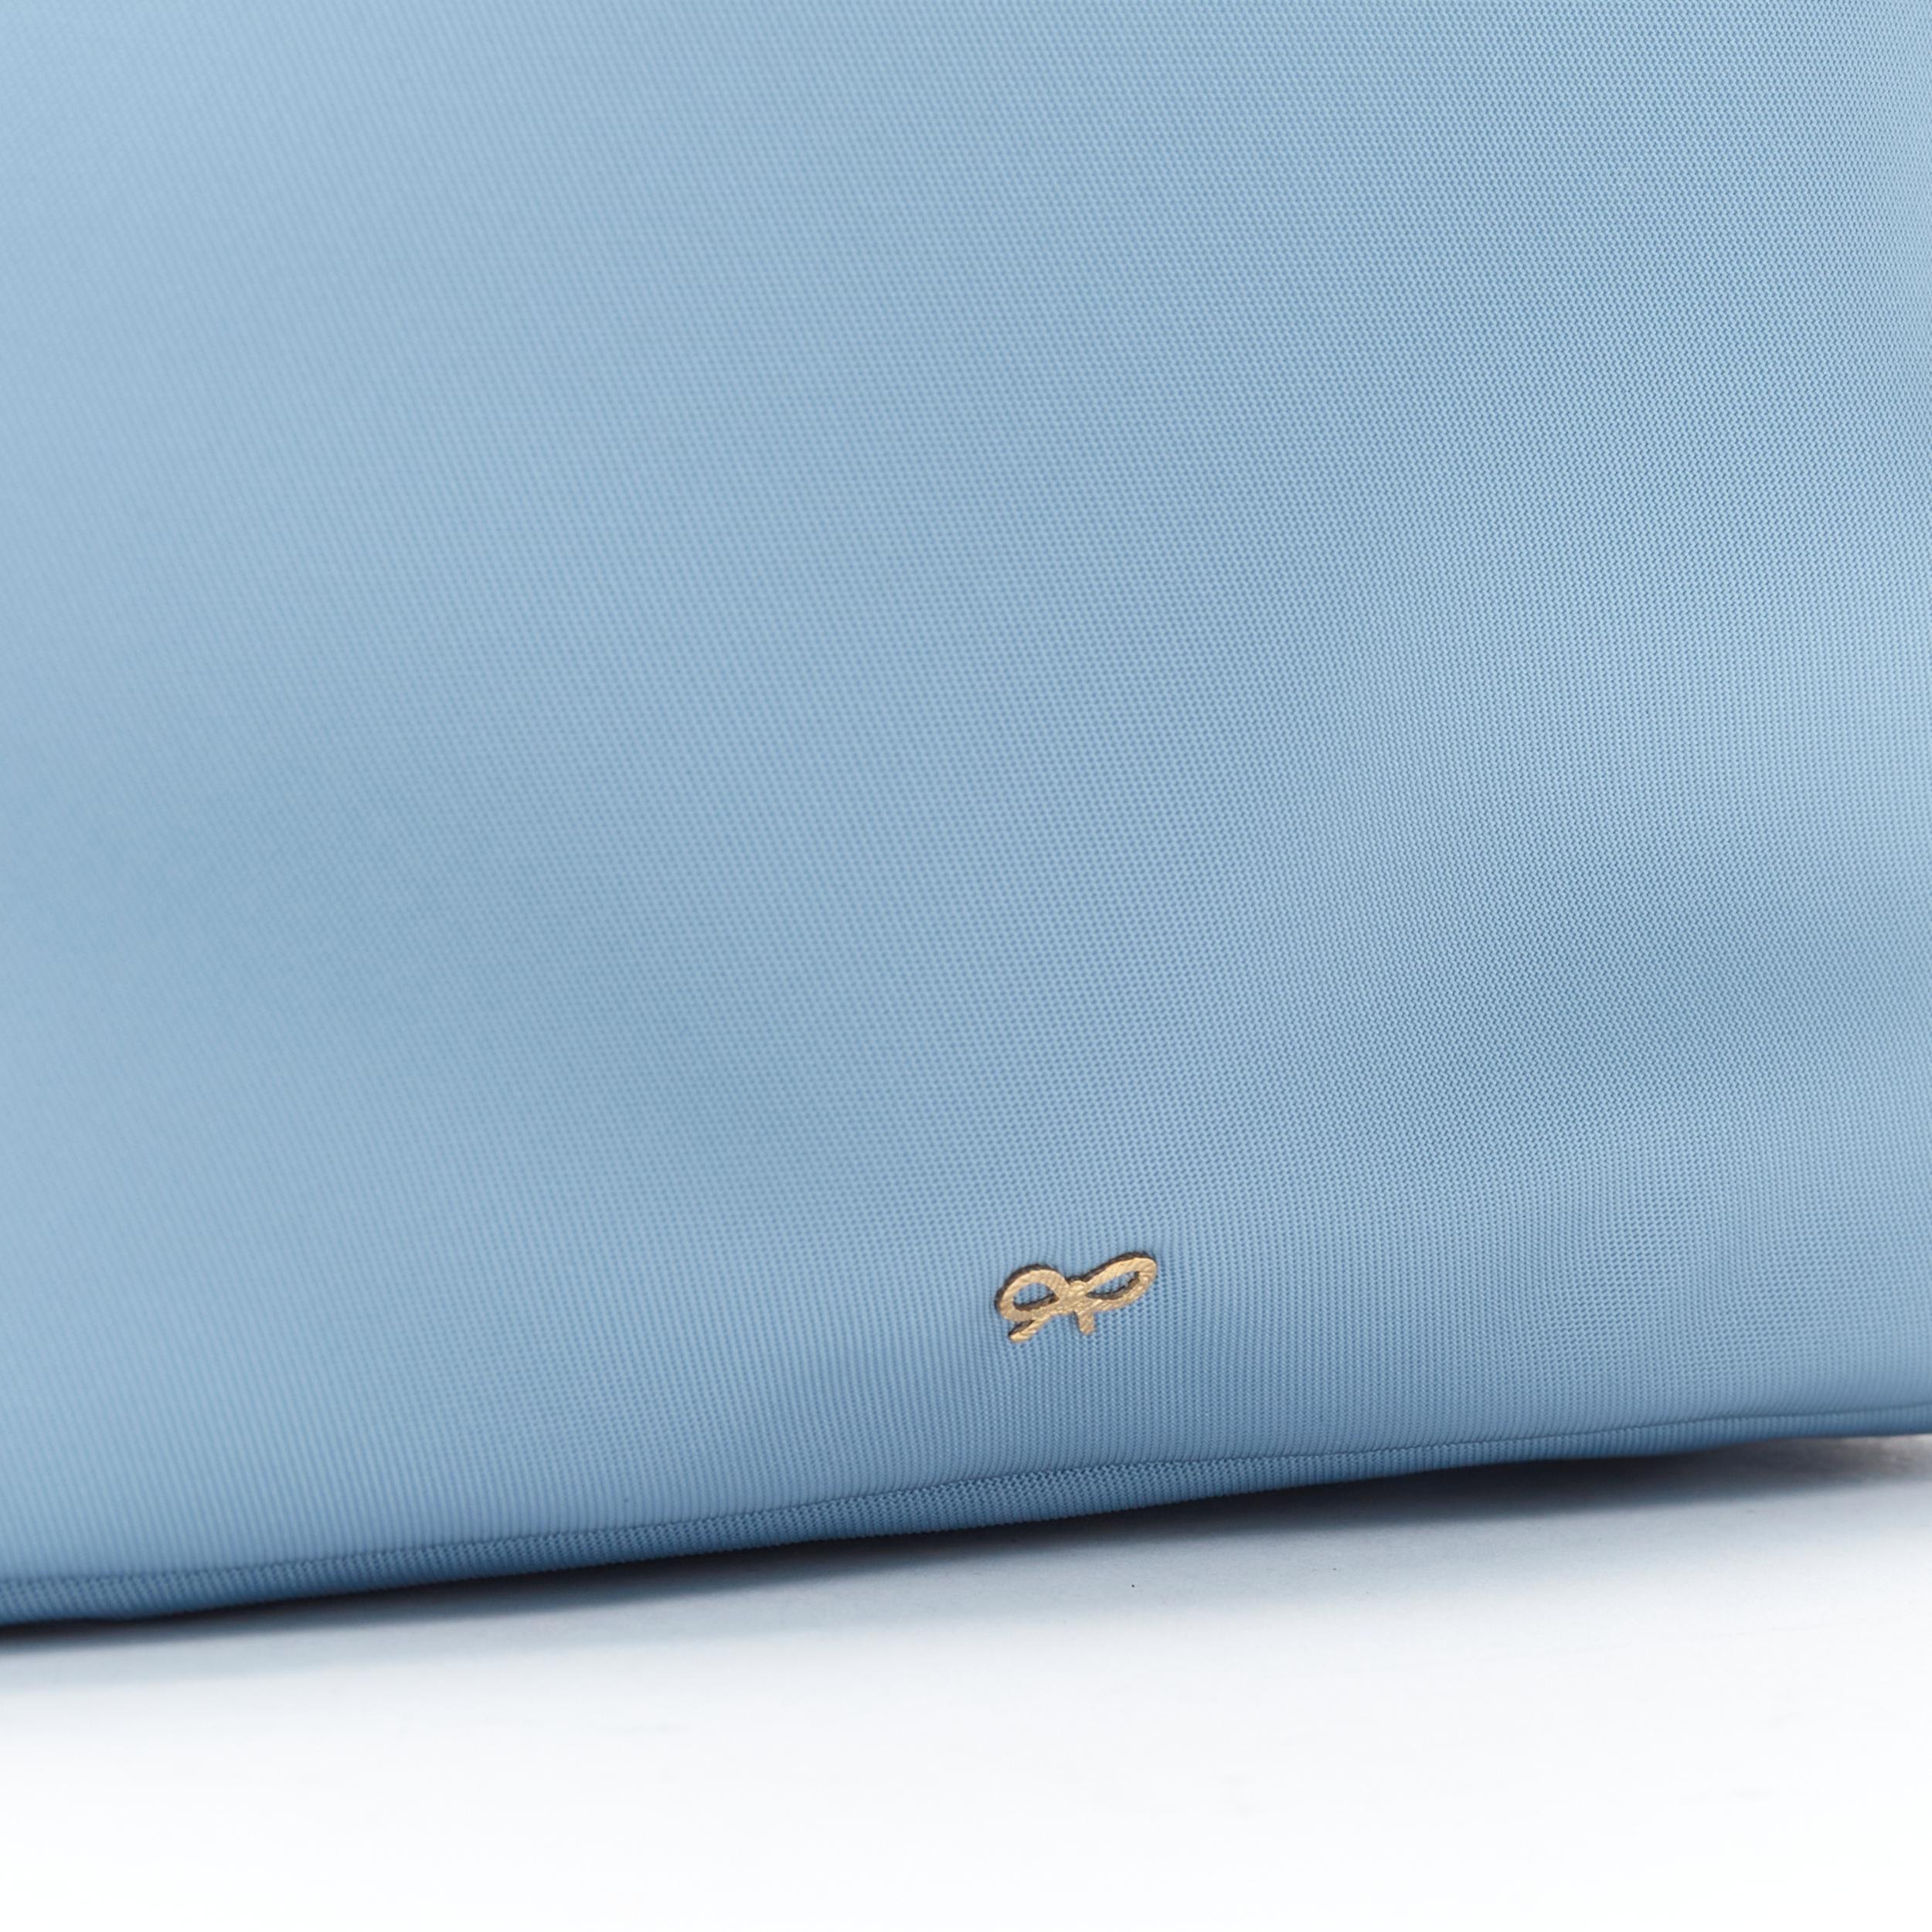 ANYA HINDMARCH Triple Zip blue teal navy nylon make up pouch bag clutch 2